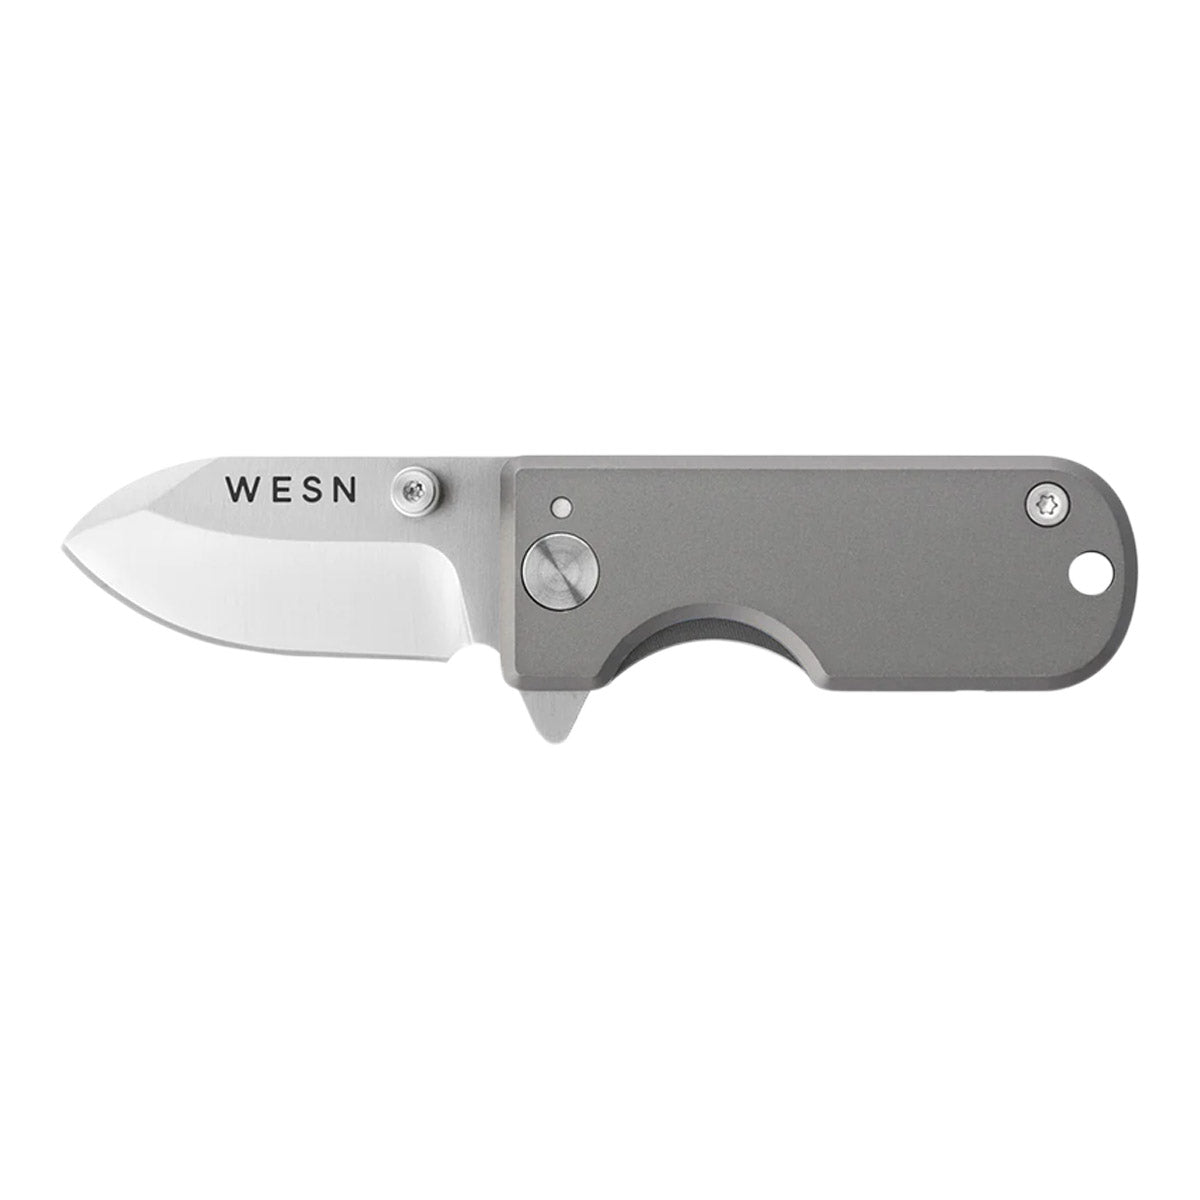 WESN Microblade Pocket Knife